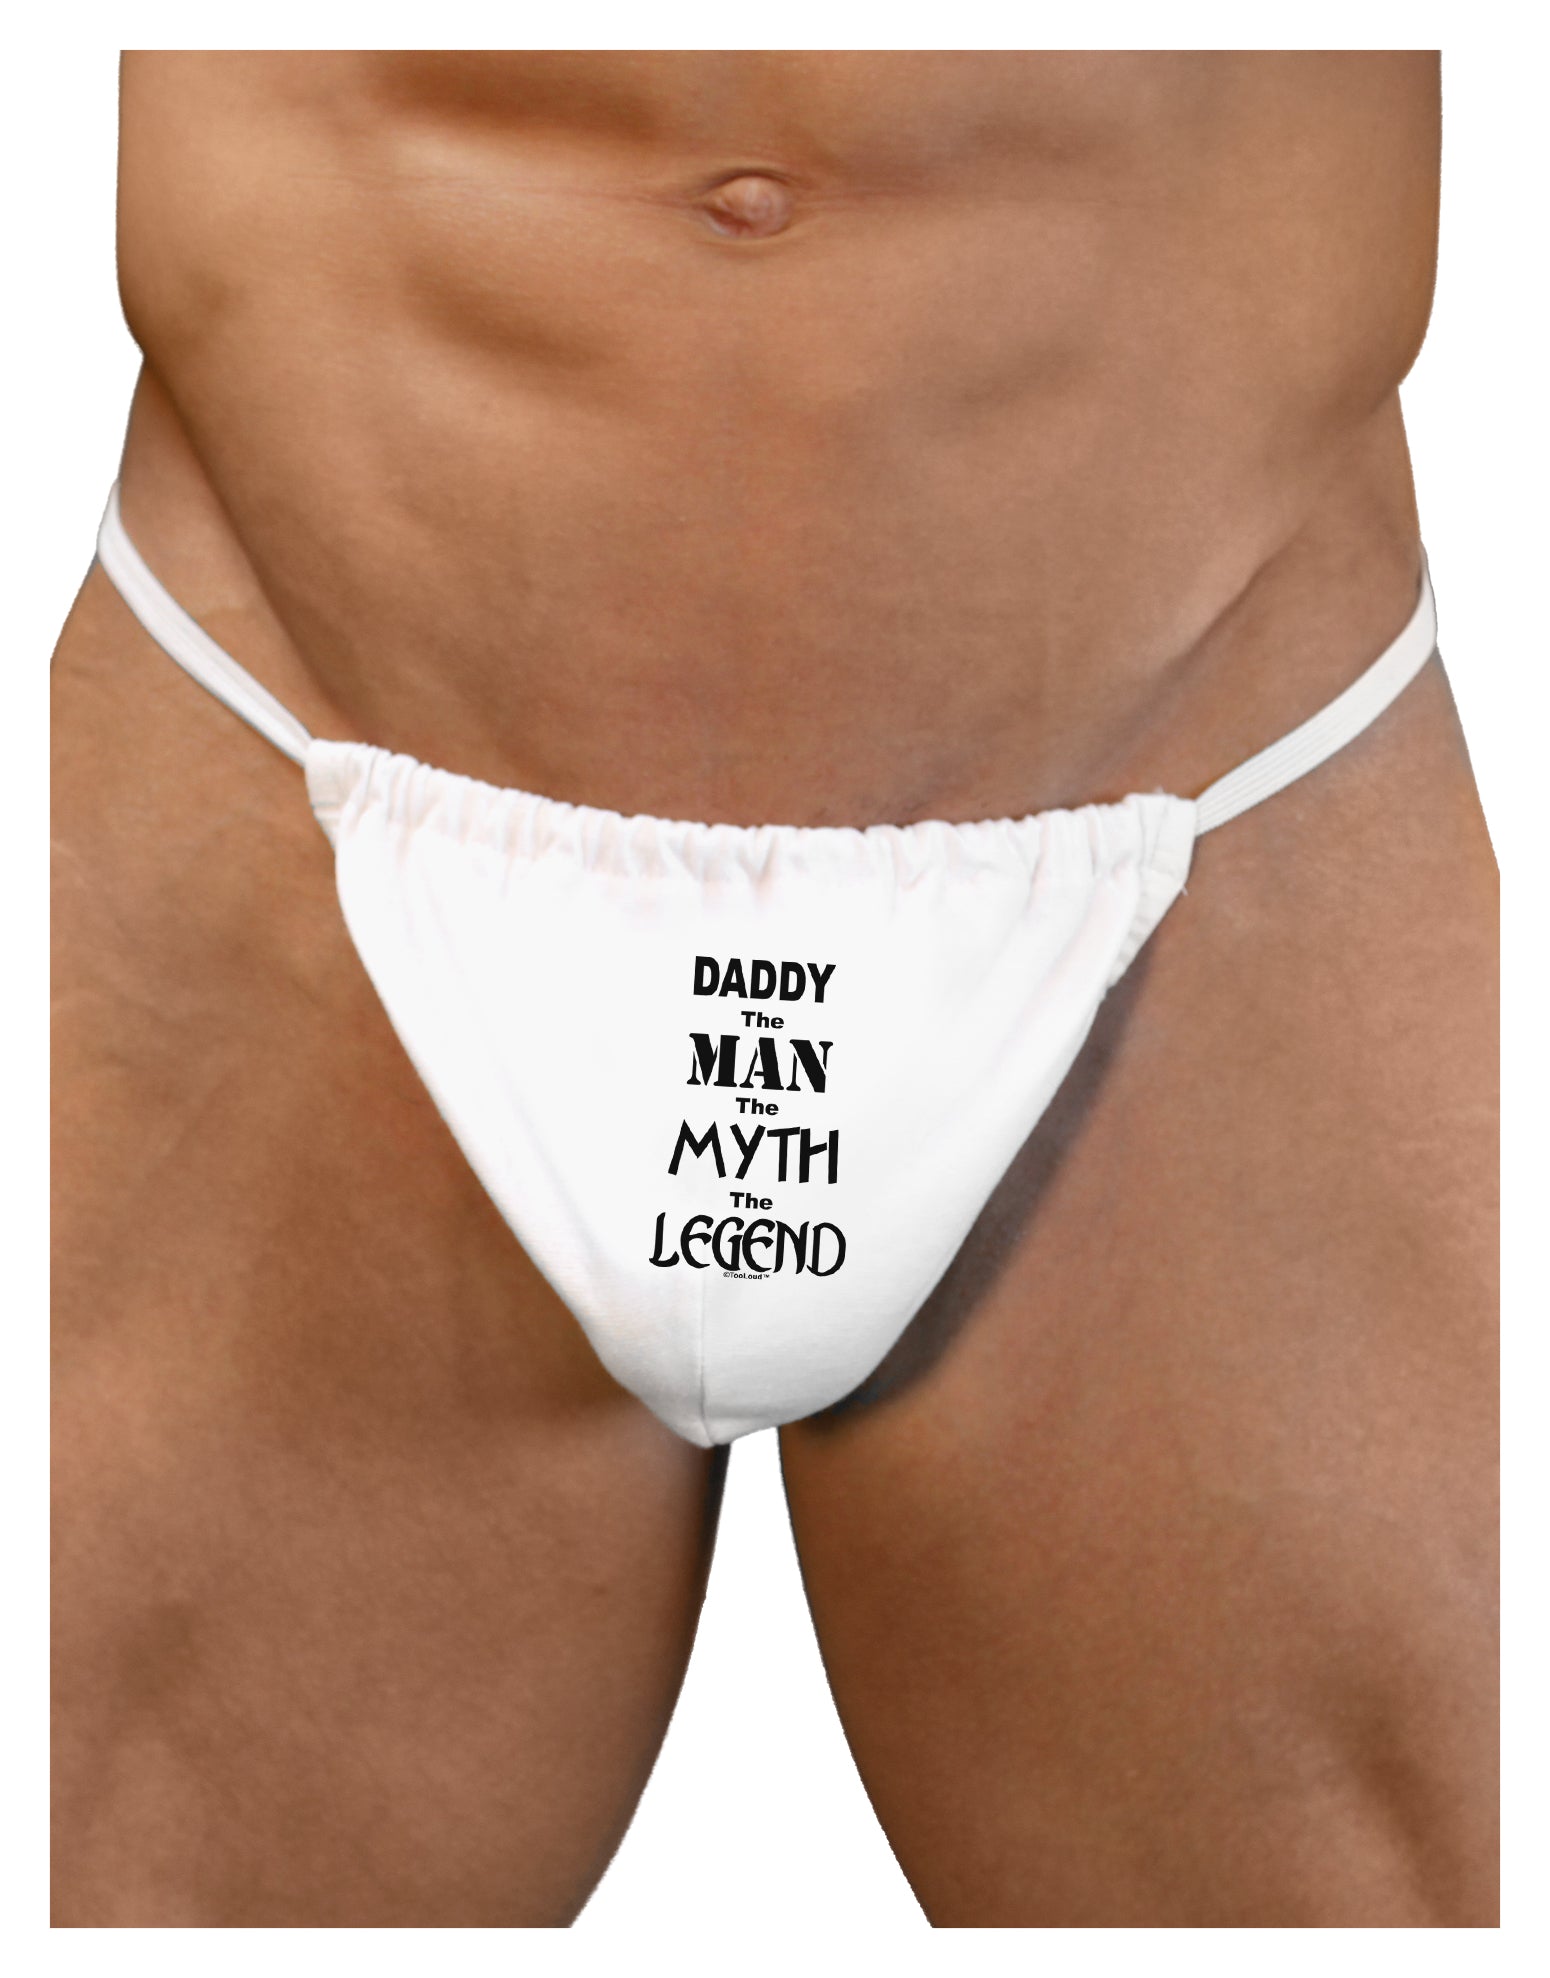 Daddy The Man The Myth The Legend Mens NDS Wear Briefs Underwear